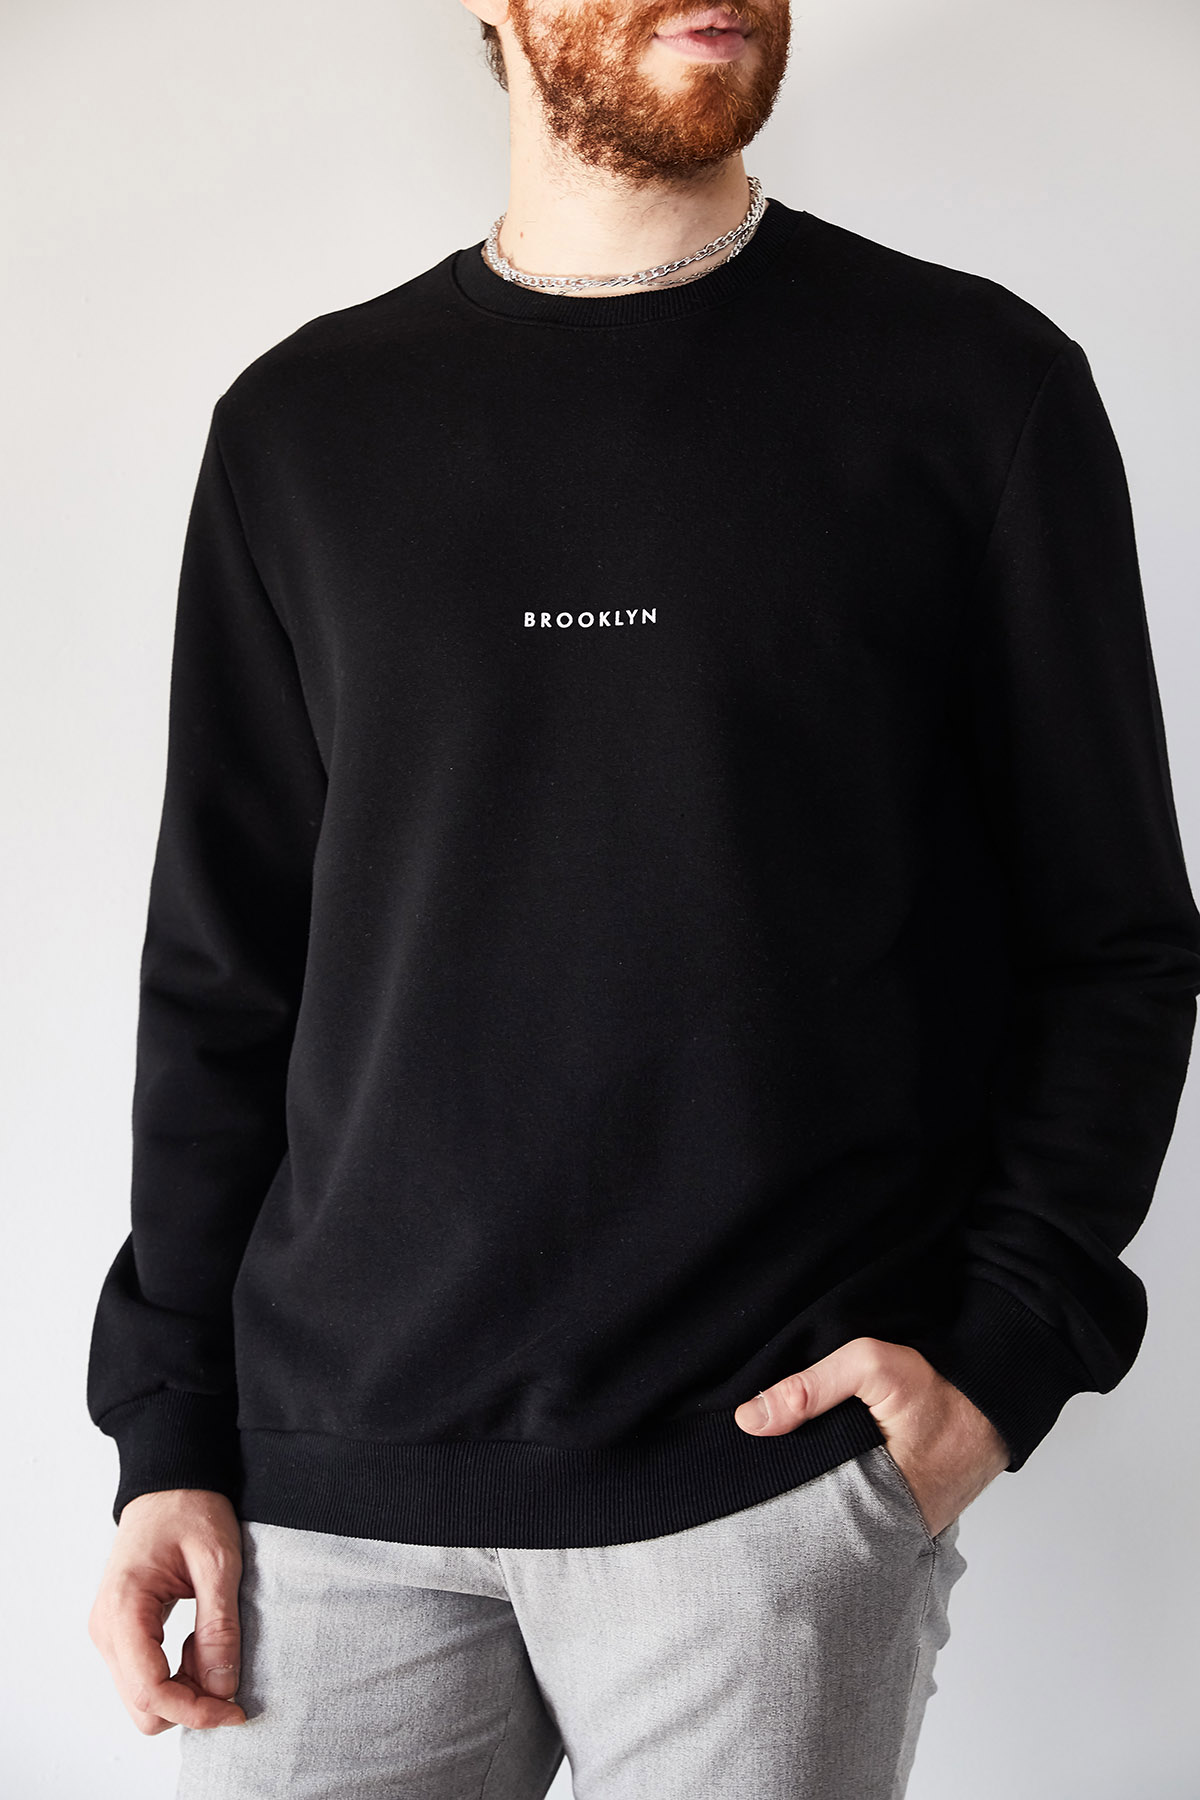 Siyah Brooklyn Baskılı Sweatshirt 1KXE8-44229-02 